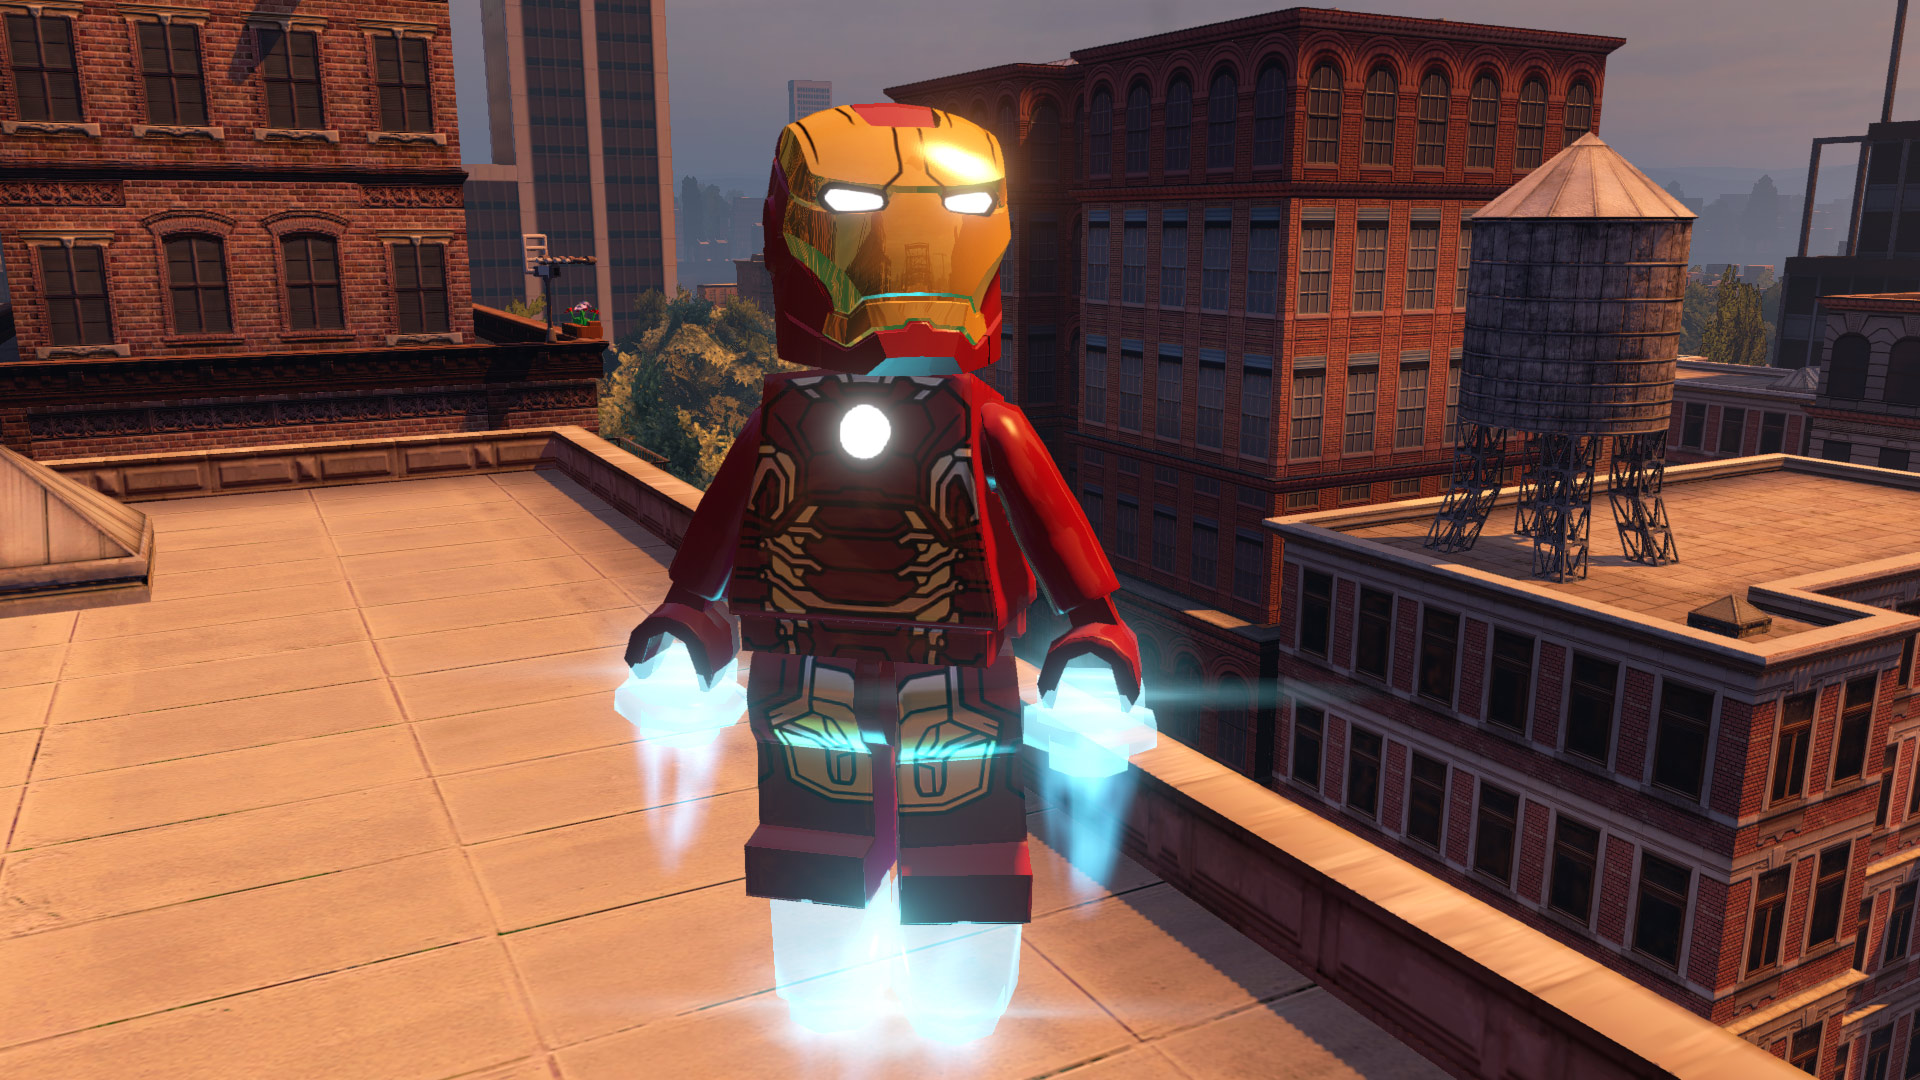 Buy Lego Marvel Super Heroes Steam